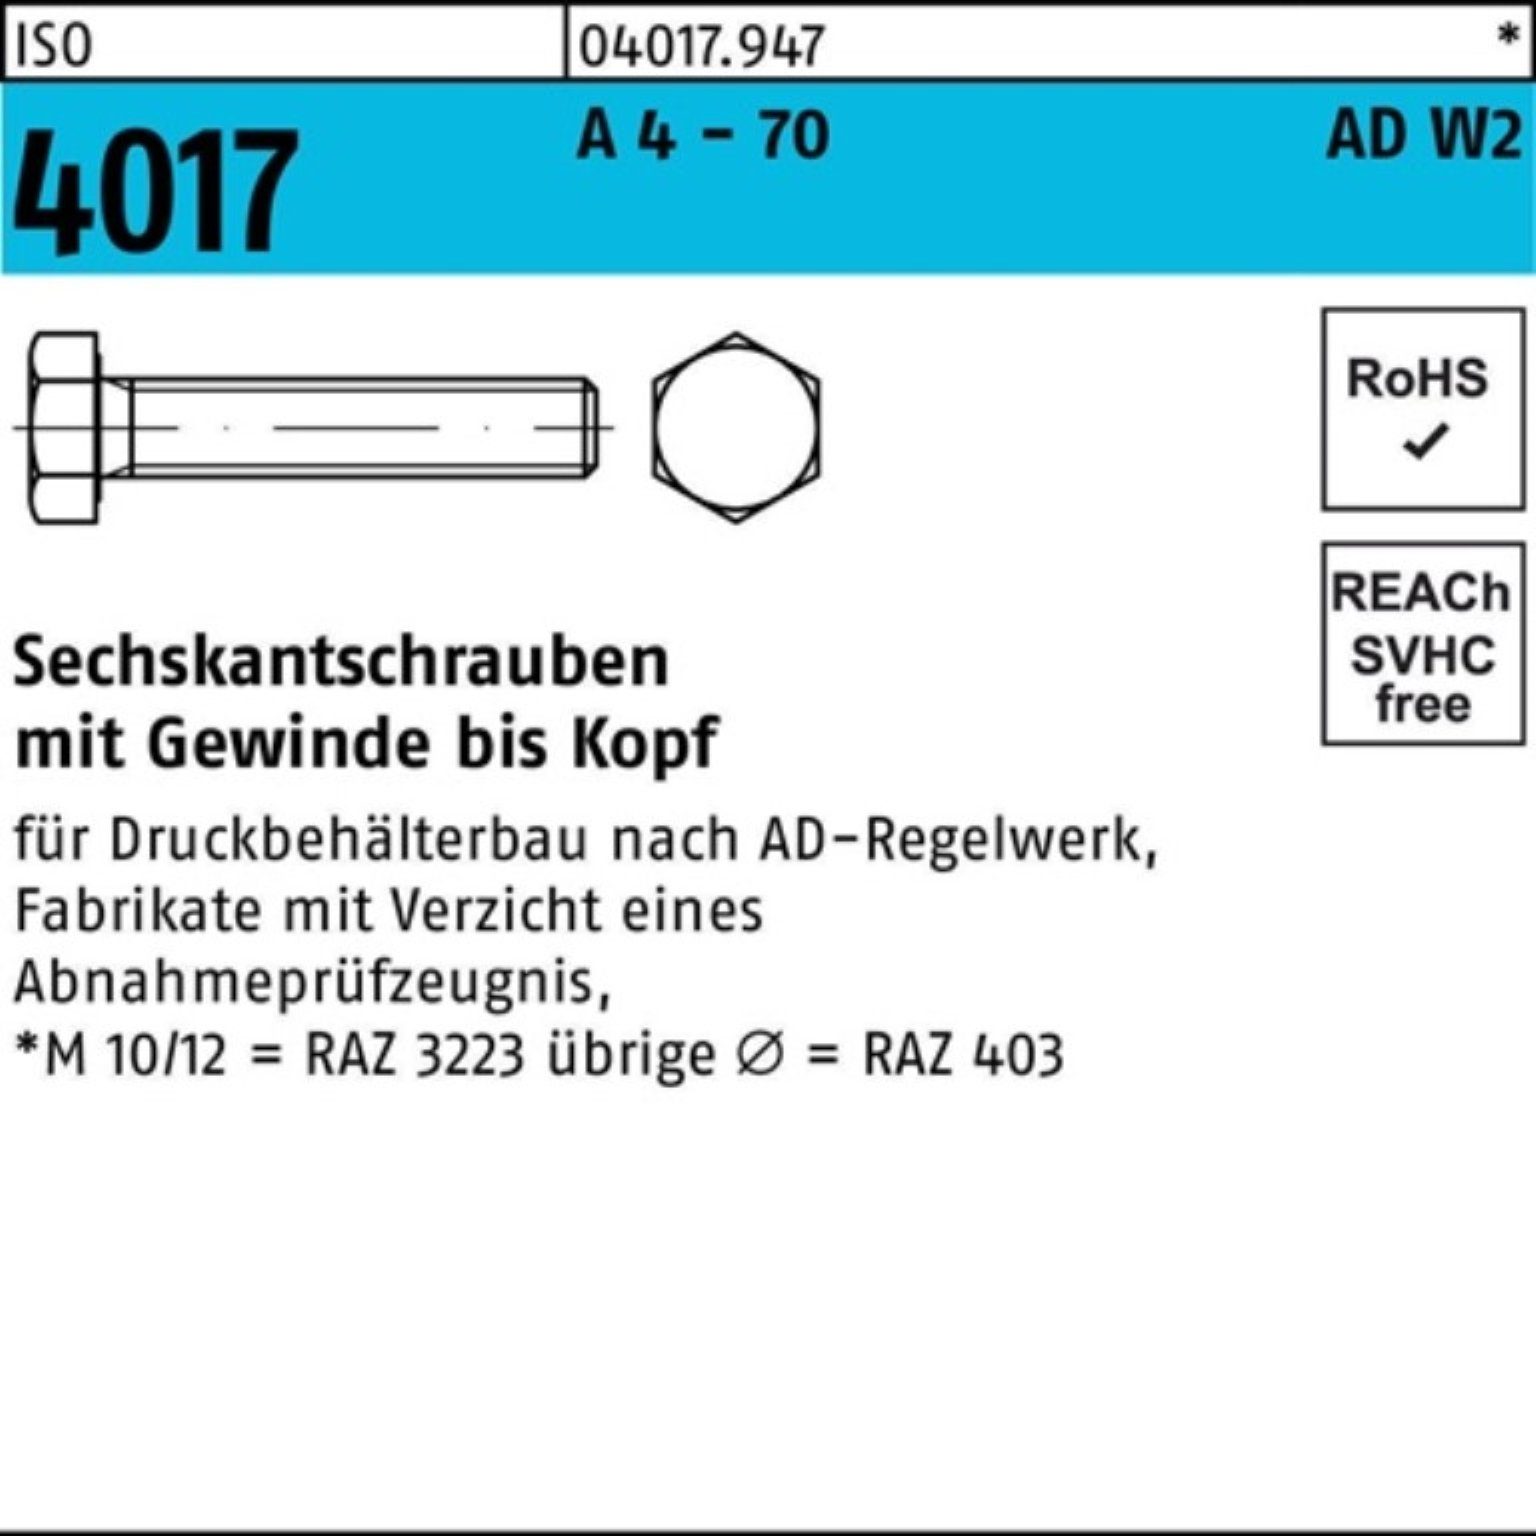 Sechskantschraube 4 - Sechskantschraube Bufab 4017 St Pack M24x ISO AD-W2 A 1 VG 100er 130 70